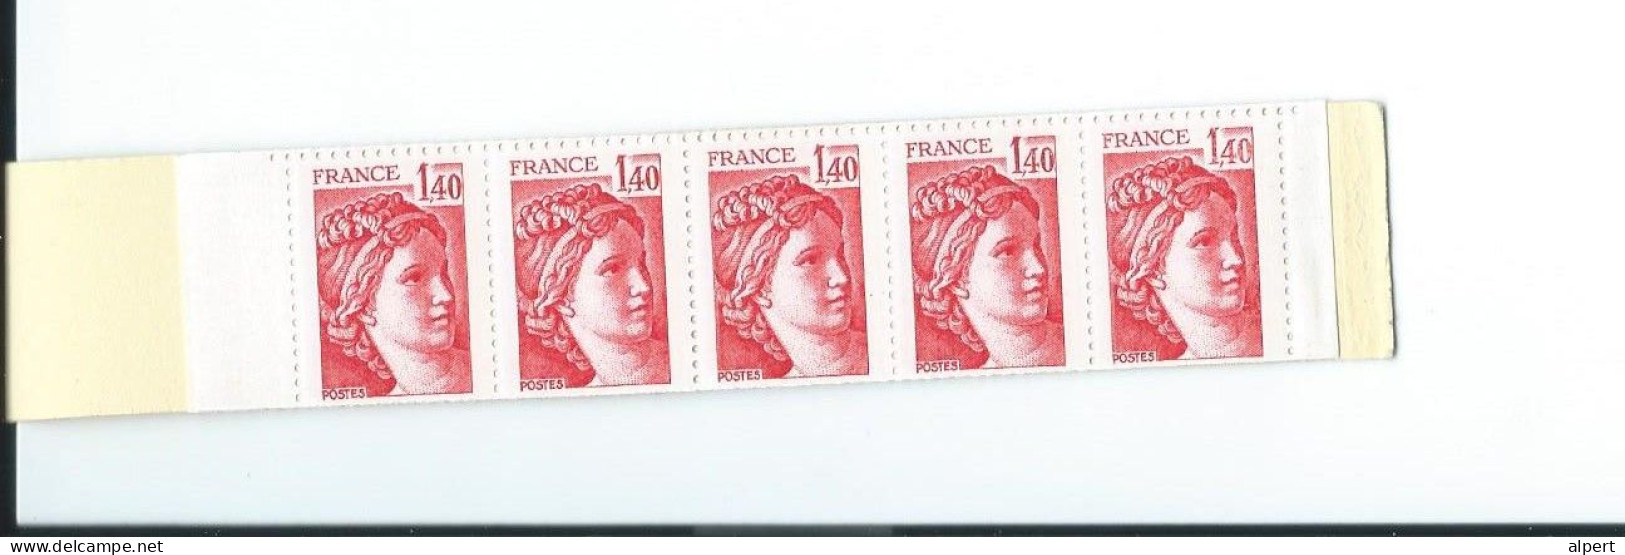 Carnet 2102 C5 Impression Recto Verso Voir Scanners RARETE Prix Super Bas - Unused Stamps